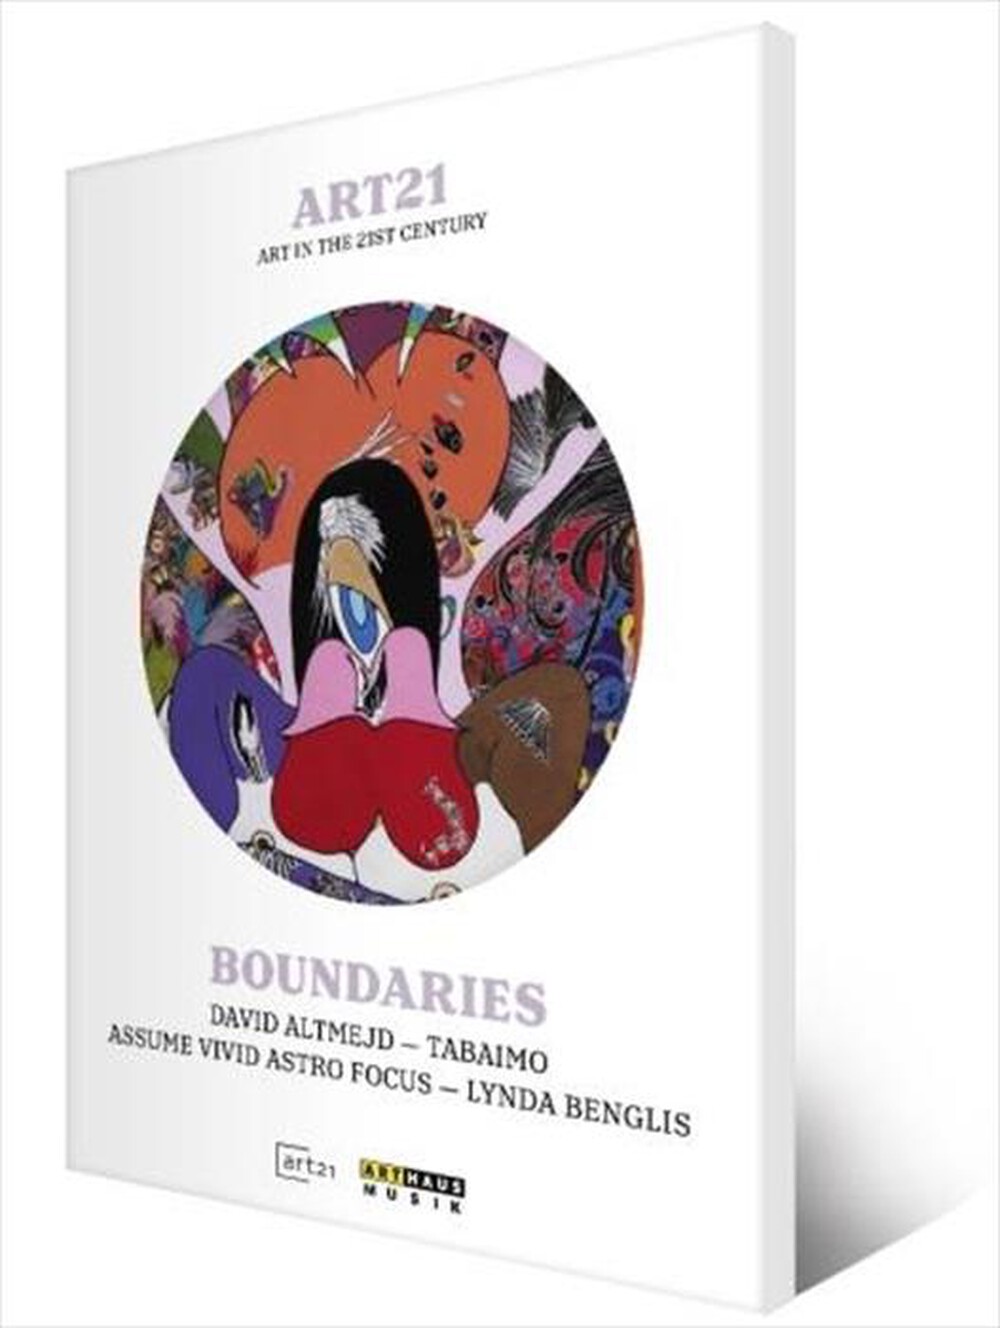 "Arthaus Musik - Bounderies - Art In The 21st Century"